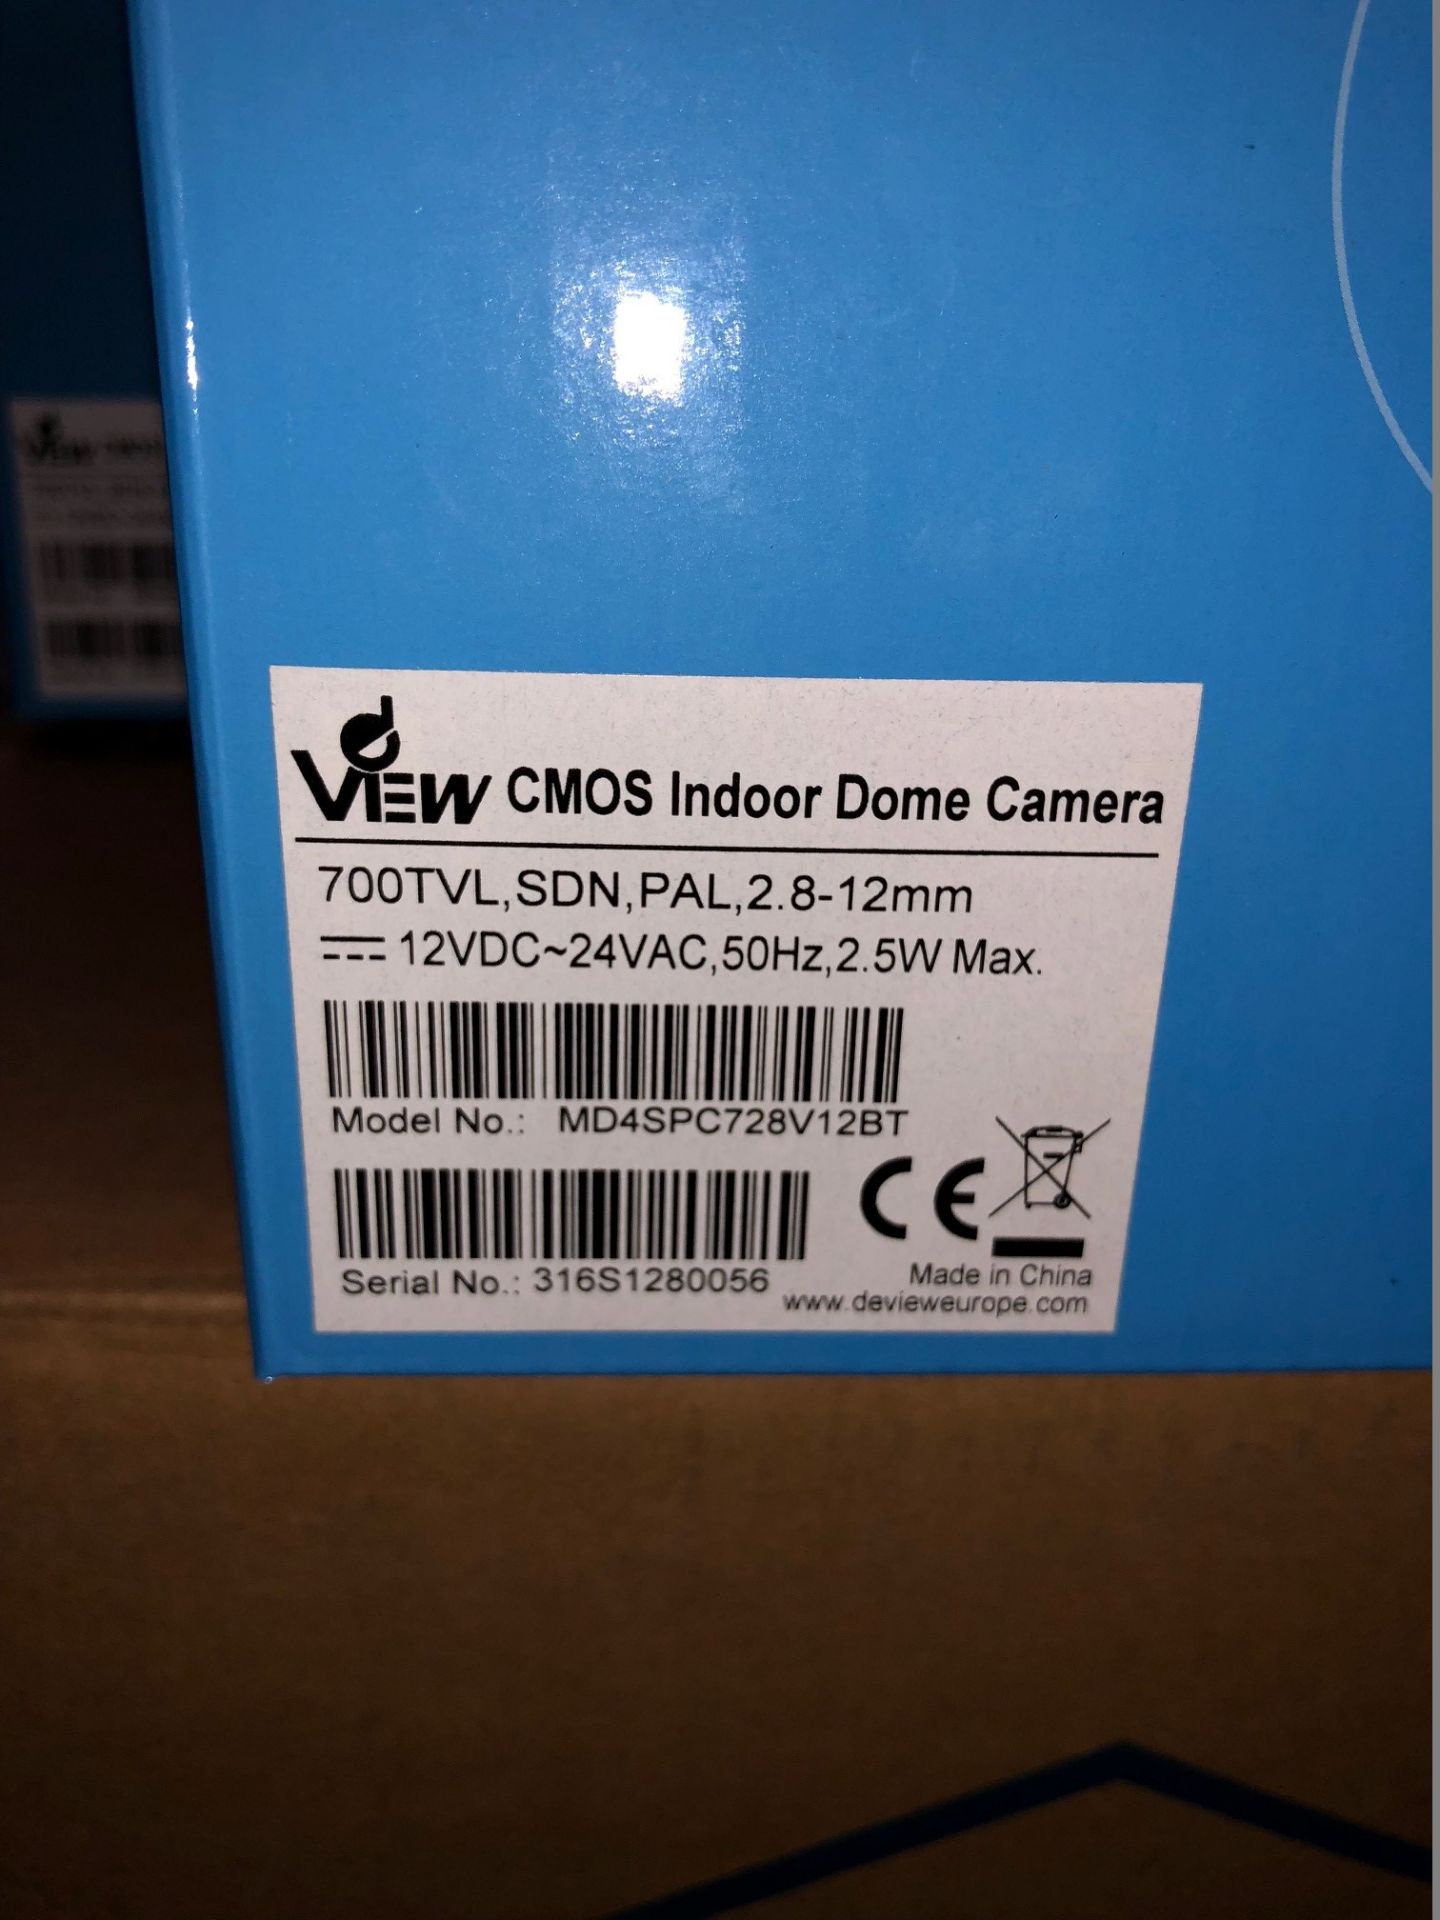 4 x dView CMOS Indoor Dome Cameras - 700TVL, SDN, PAL, 2.8-12mm - Model MD4SPC728V12BT (Brand - Image 2 of 3